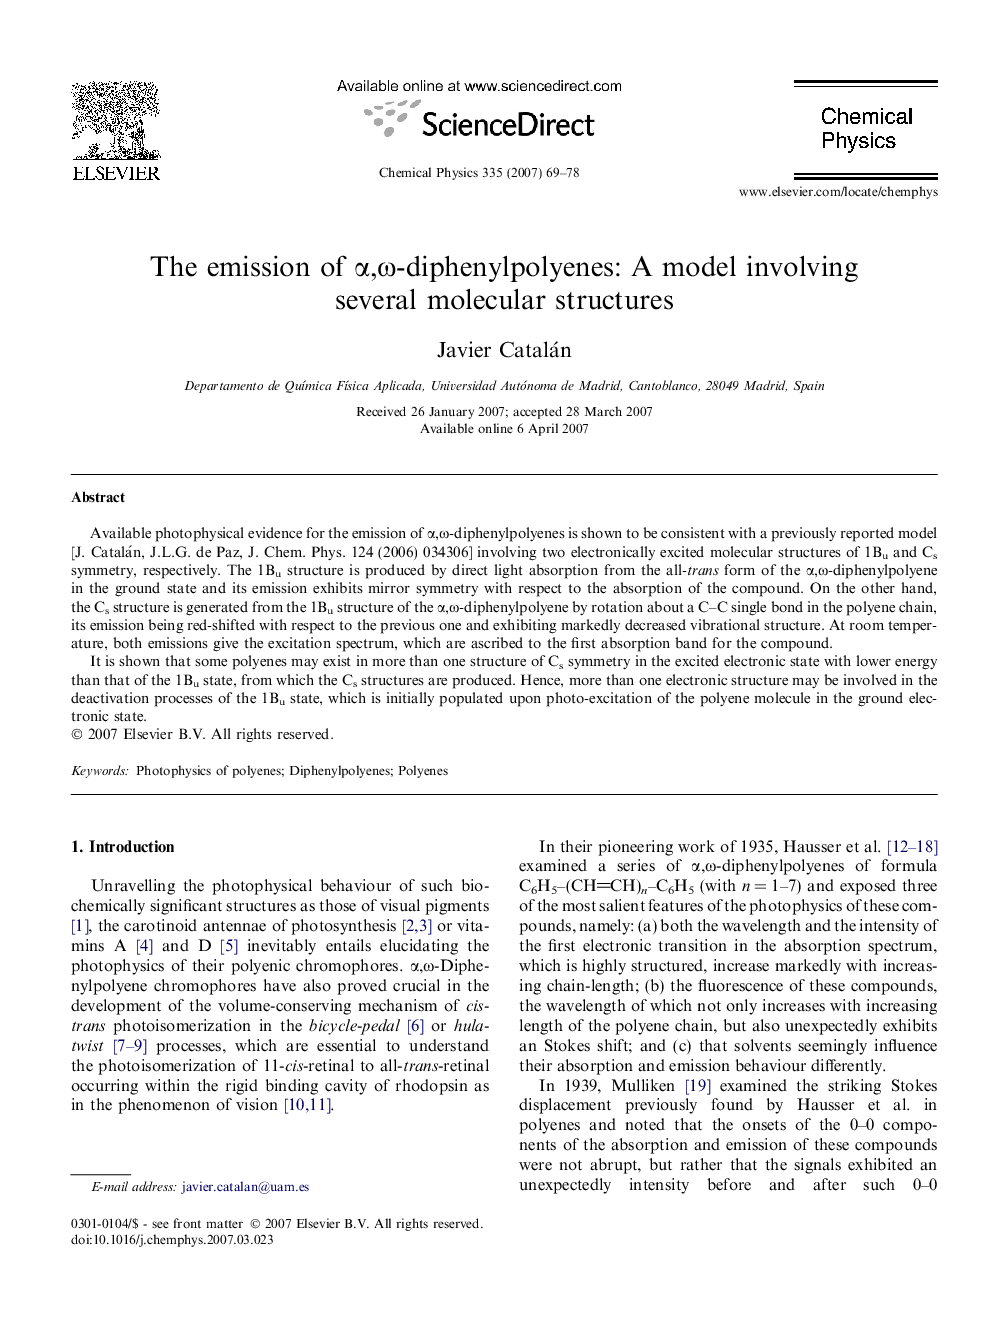 The emission of Î±,Ï-diphenylpolyenes: A model involving several molecular structures